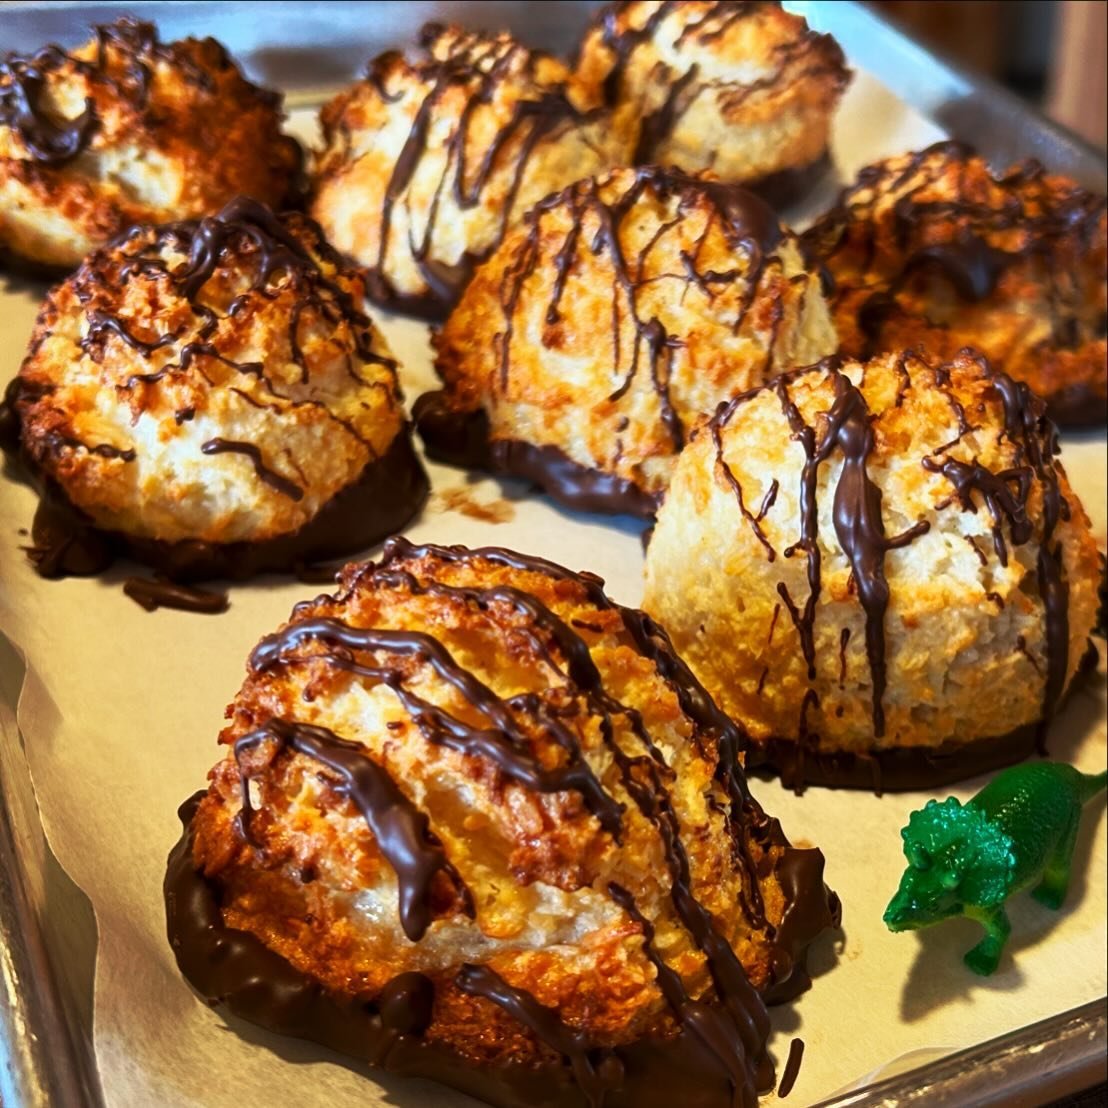 SUNDAY! Chocolate Coconut Macaroons! Gluten Free!
***
Lunch Specials:☀️Poutine ☀️ Chile Garlic Delicata Spring Wrap &amp; Fries ☀️ grilled Chicken Bacon Ranch Sammie &amp; Fries ☀️ Chicken Salad Croissant Sammie &amp; Chips